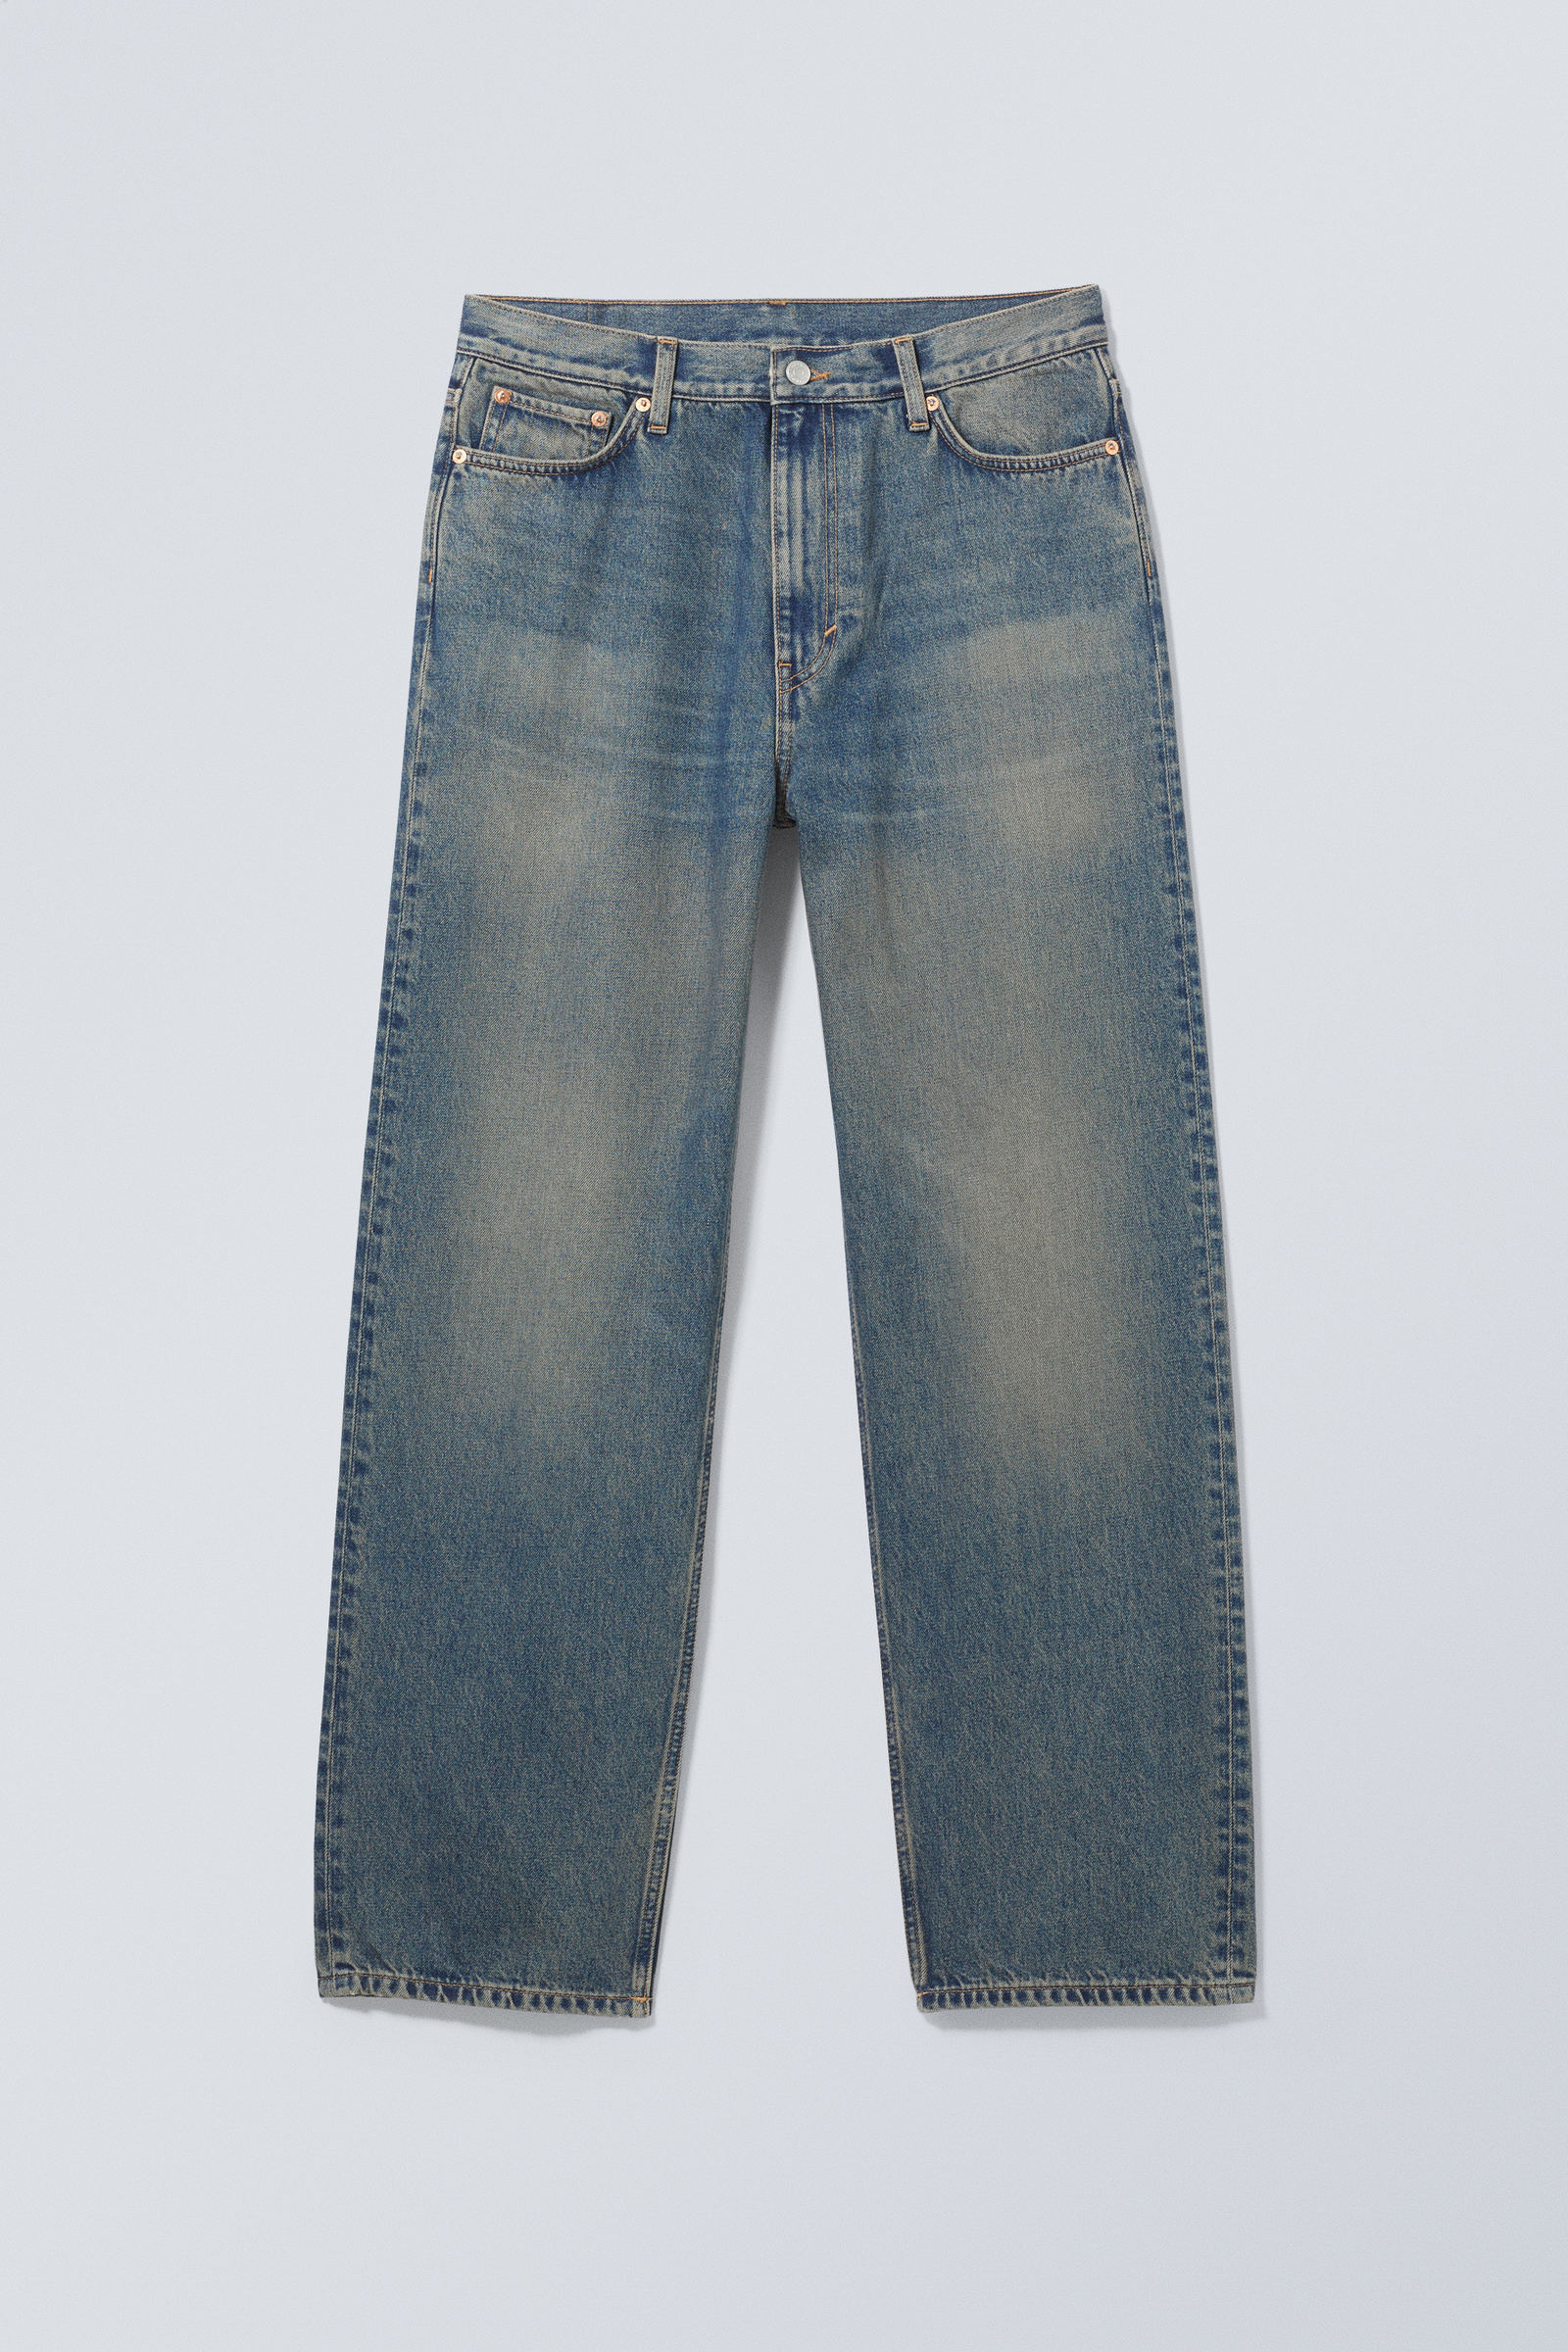 Steel Blue - Galaxy Loose Straight Jeans - 5